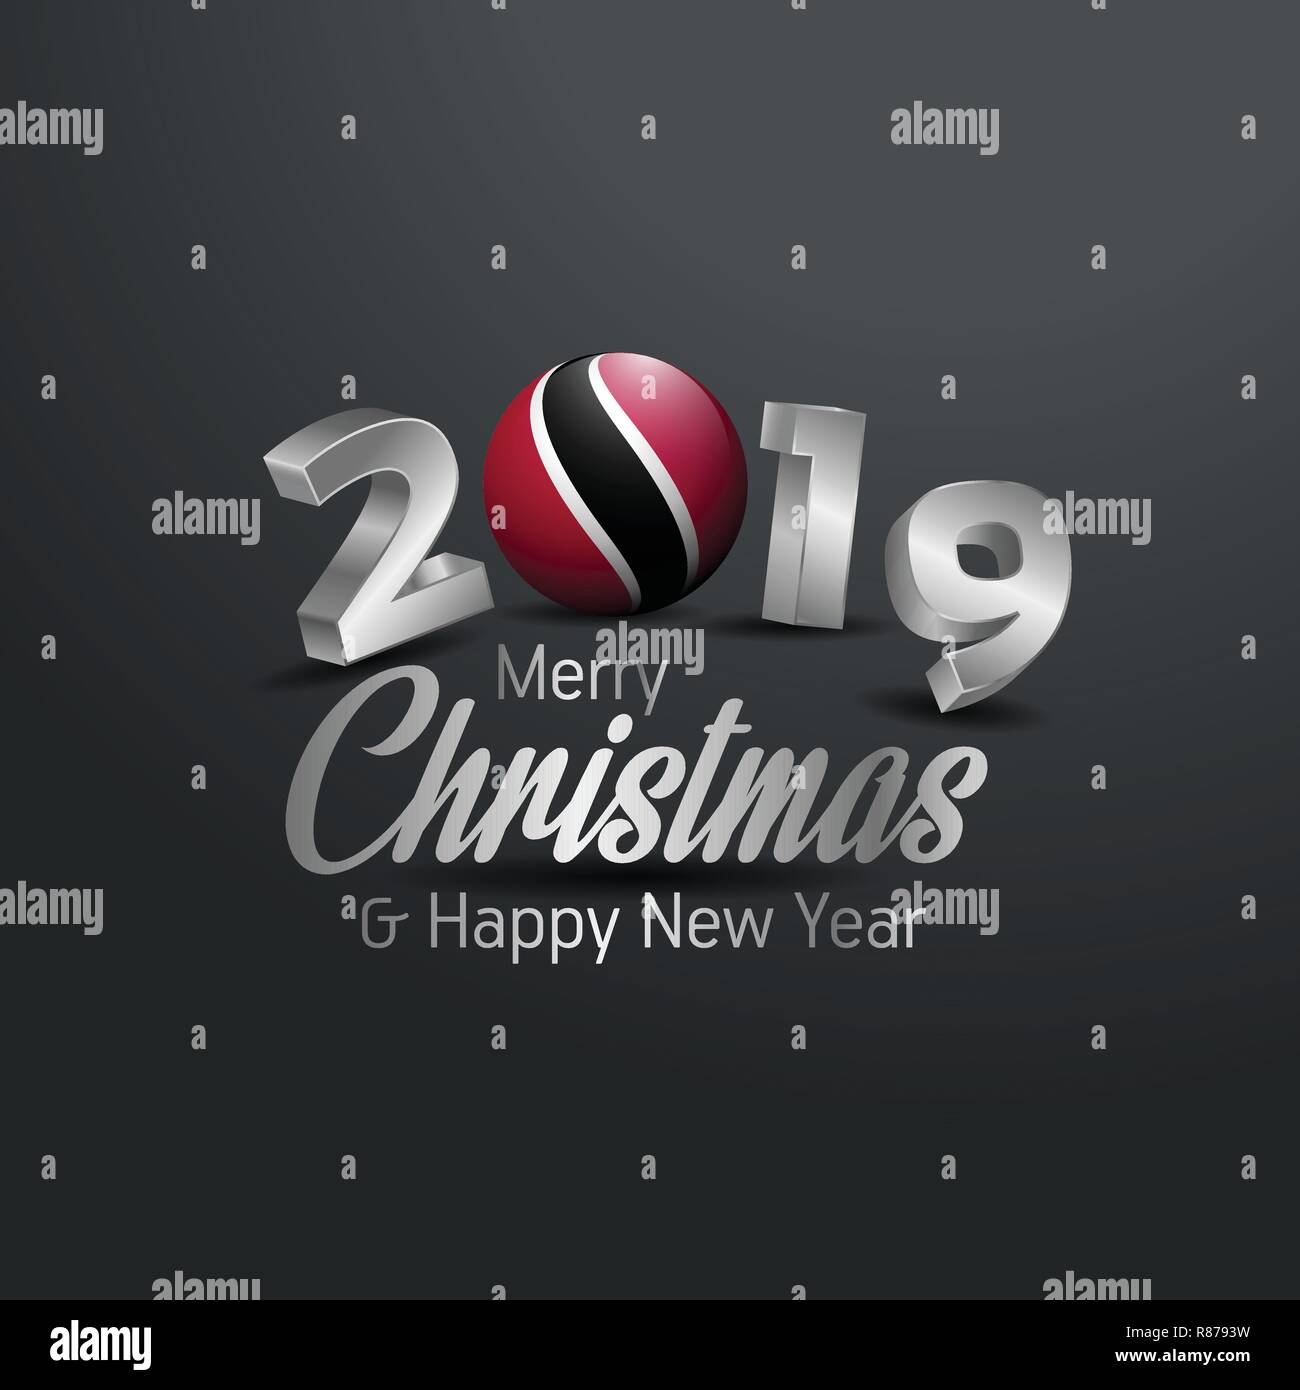 Trinidad Christmas High Resolution Stock Photography And Images Alamy